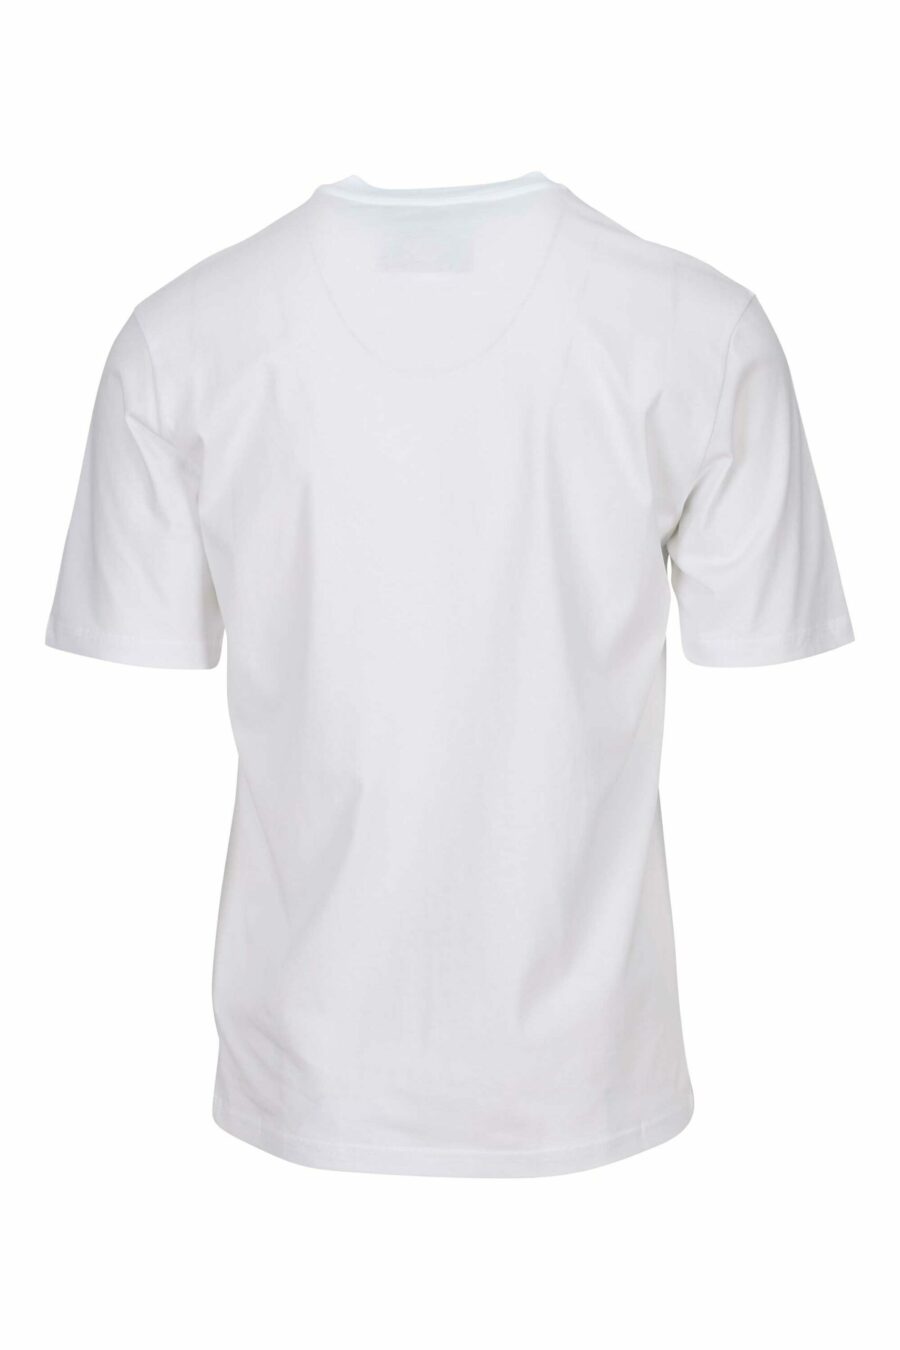 Camiseta blanca con minilogo oso dibujo - 667113767673 1 scaled